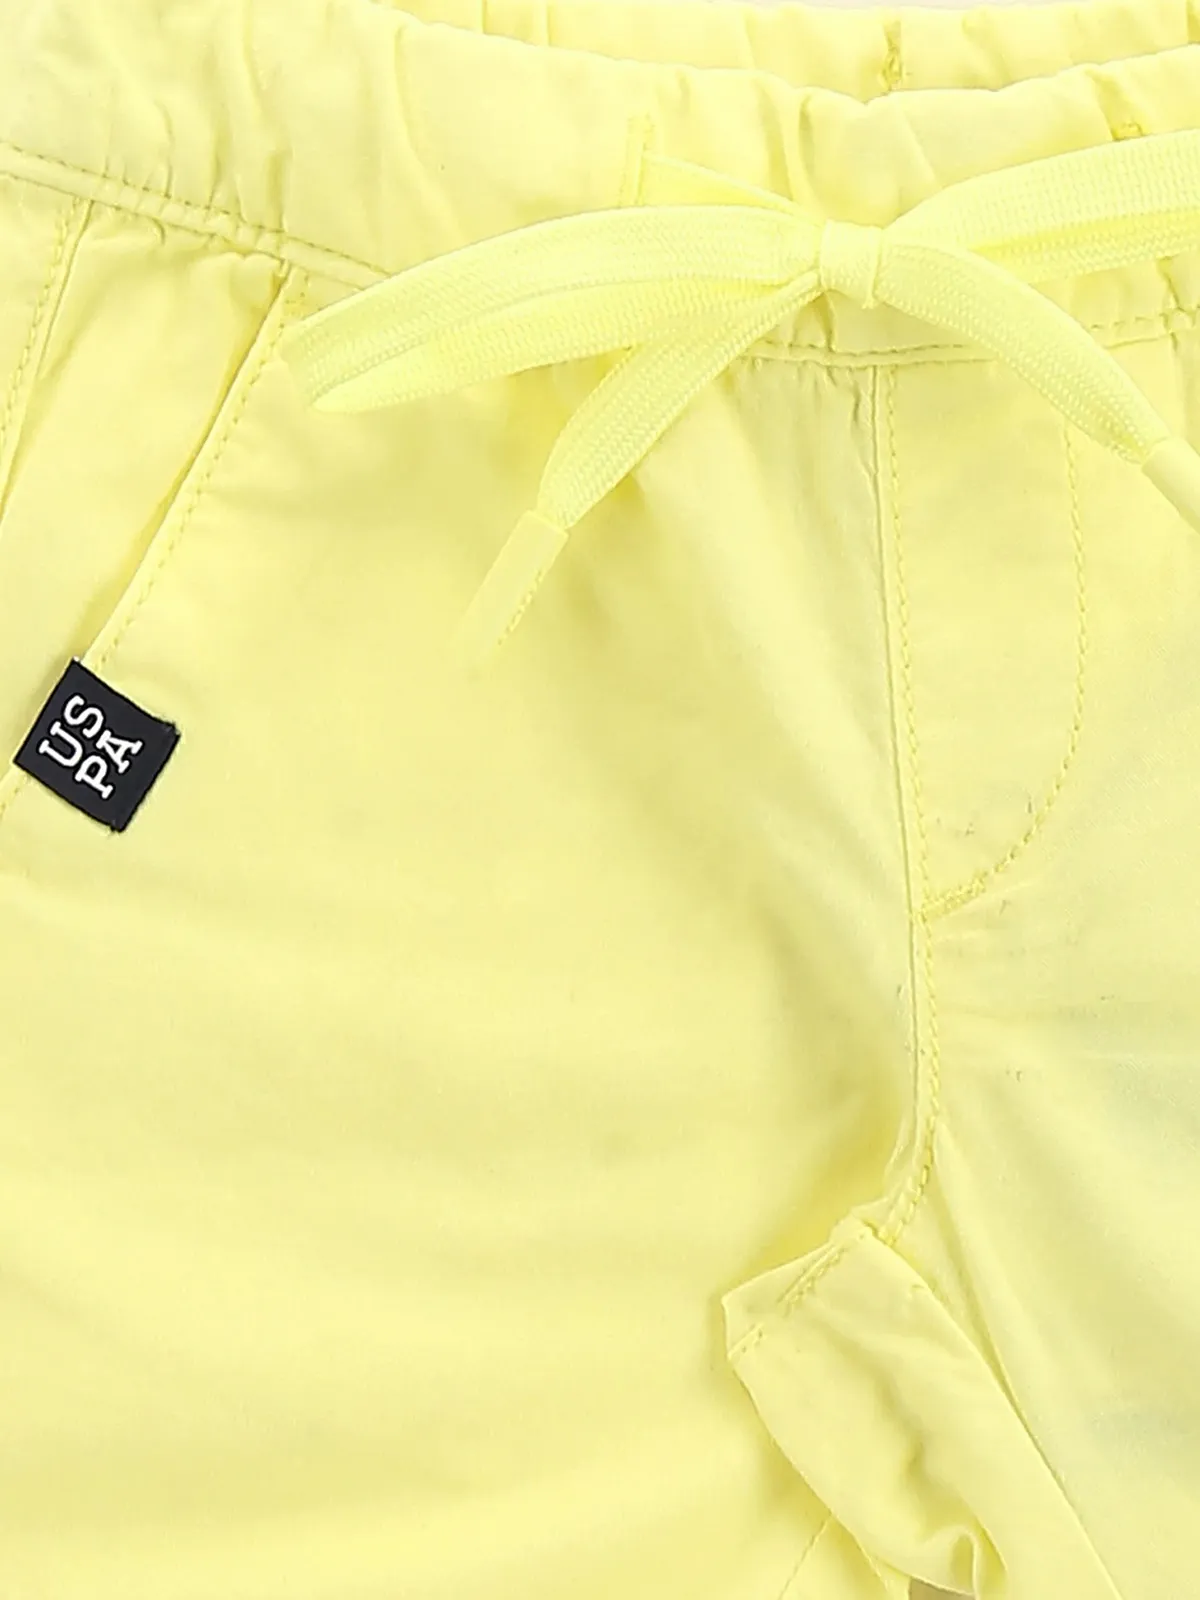 U S POLO ASSN light yellow cotton shorts